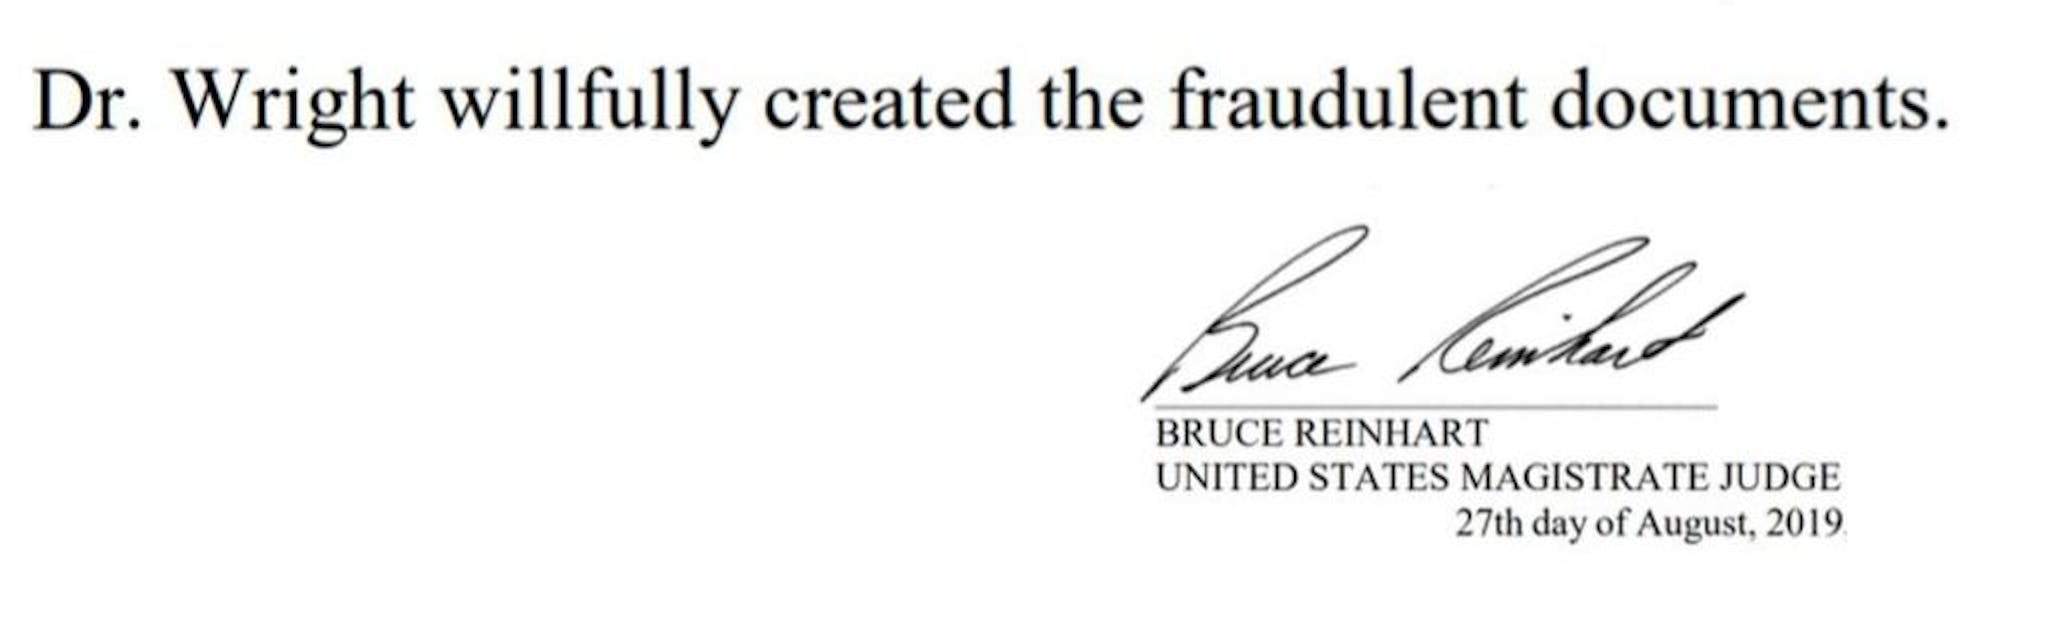 US Judge said Craig Wright created fraudulent documents